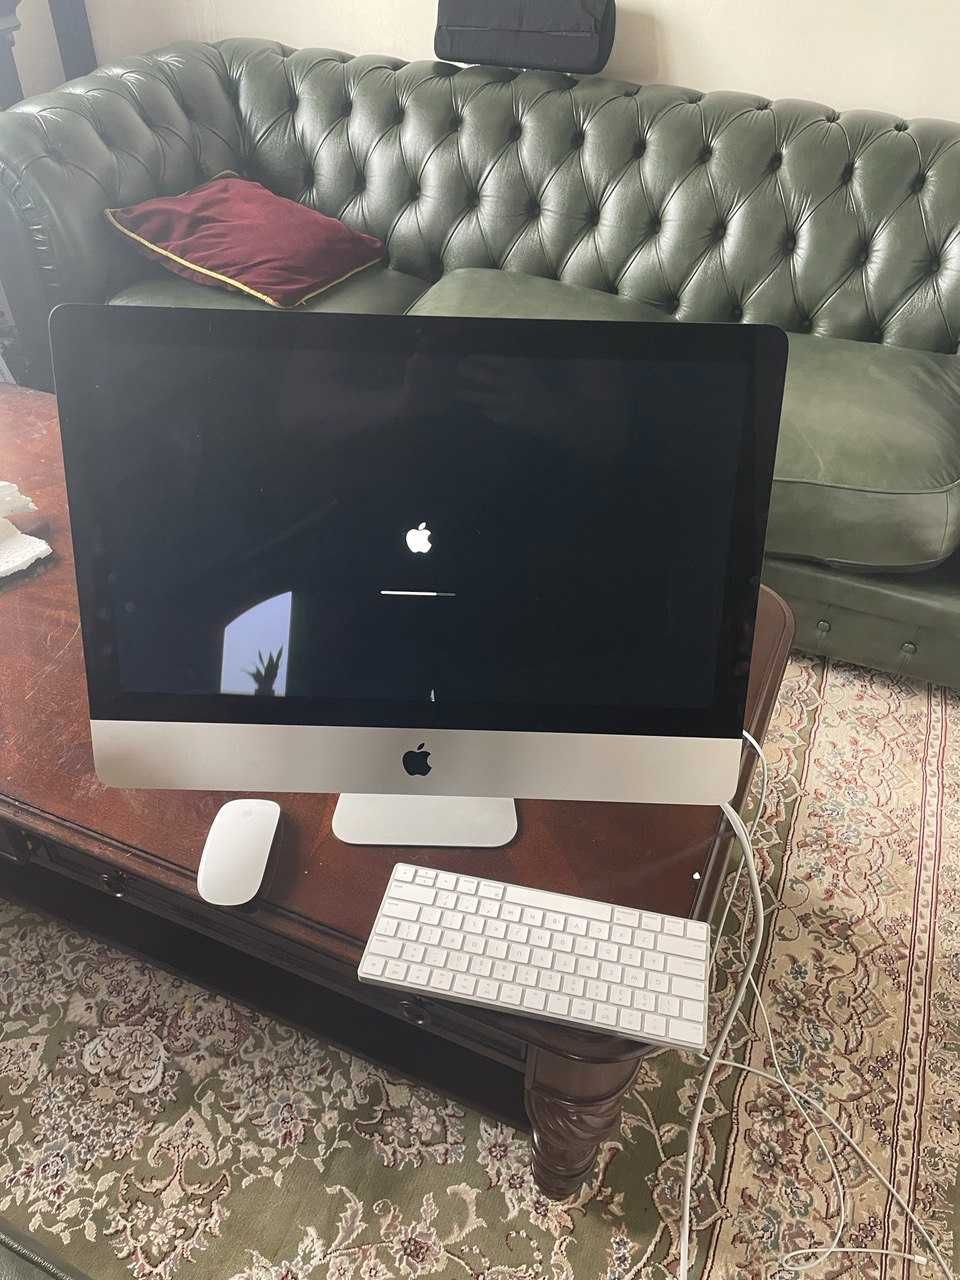 iMac (21.5-inch, 2017) 5 месяцев эксплуатации